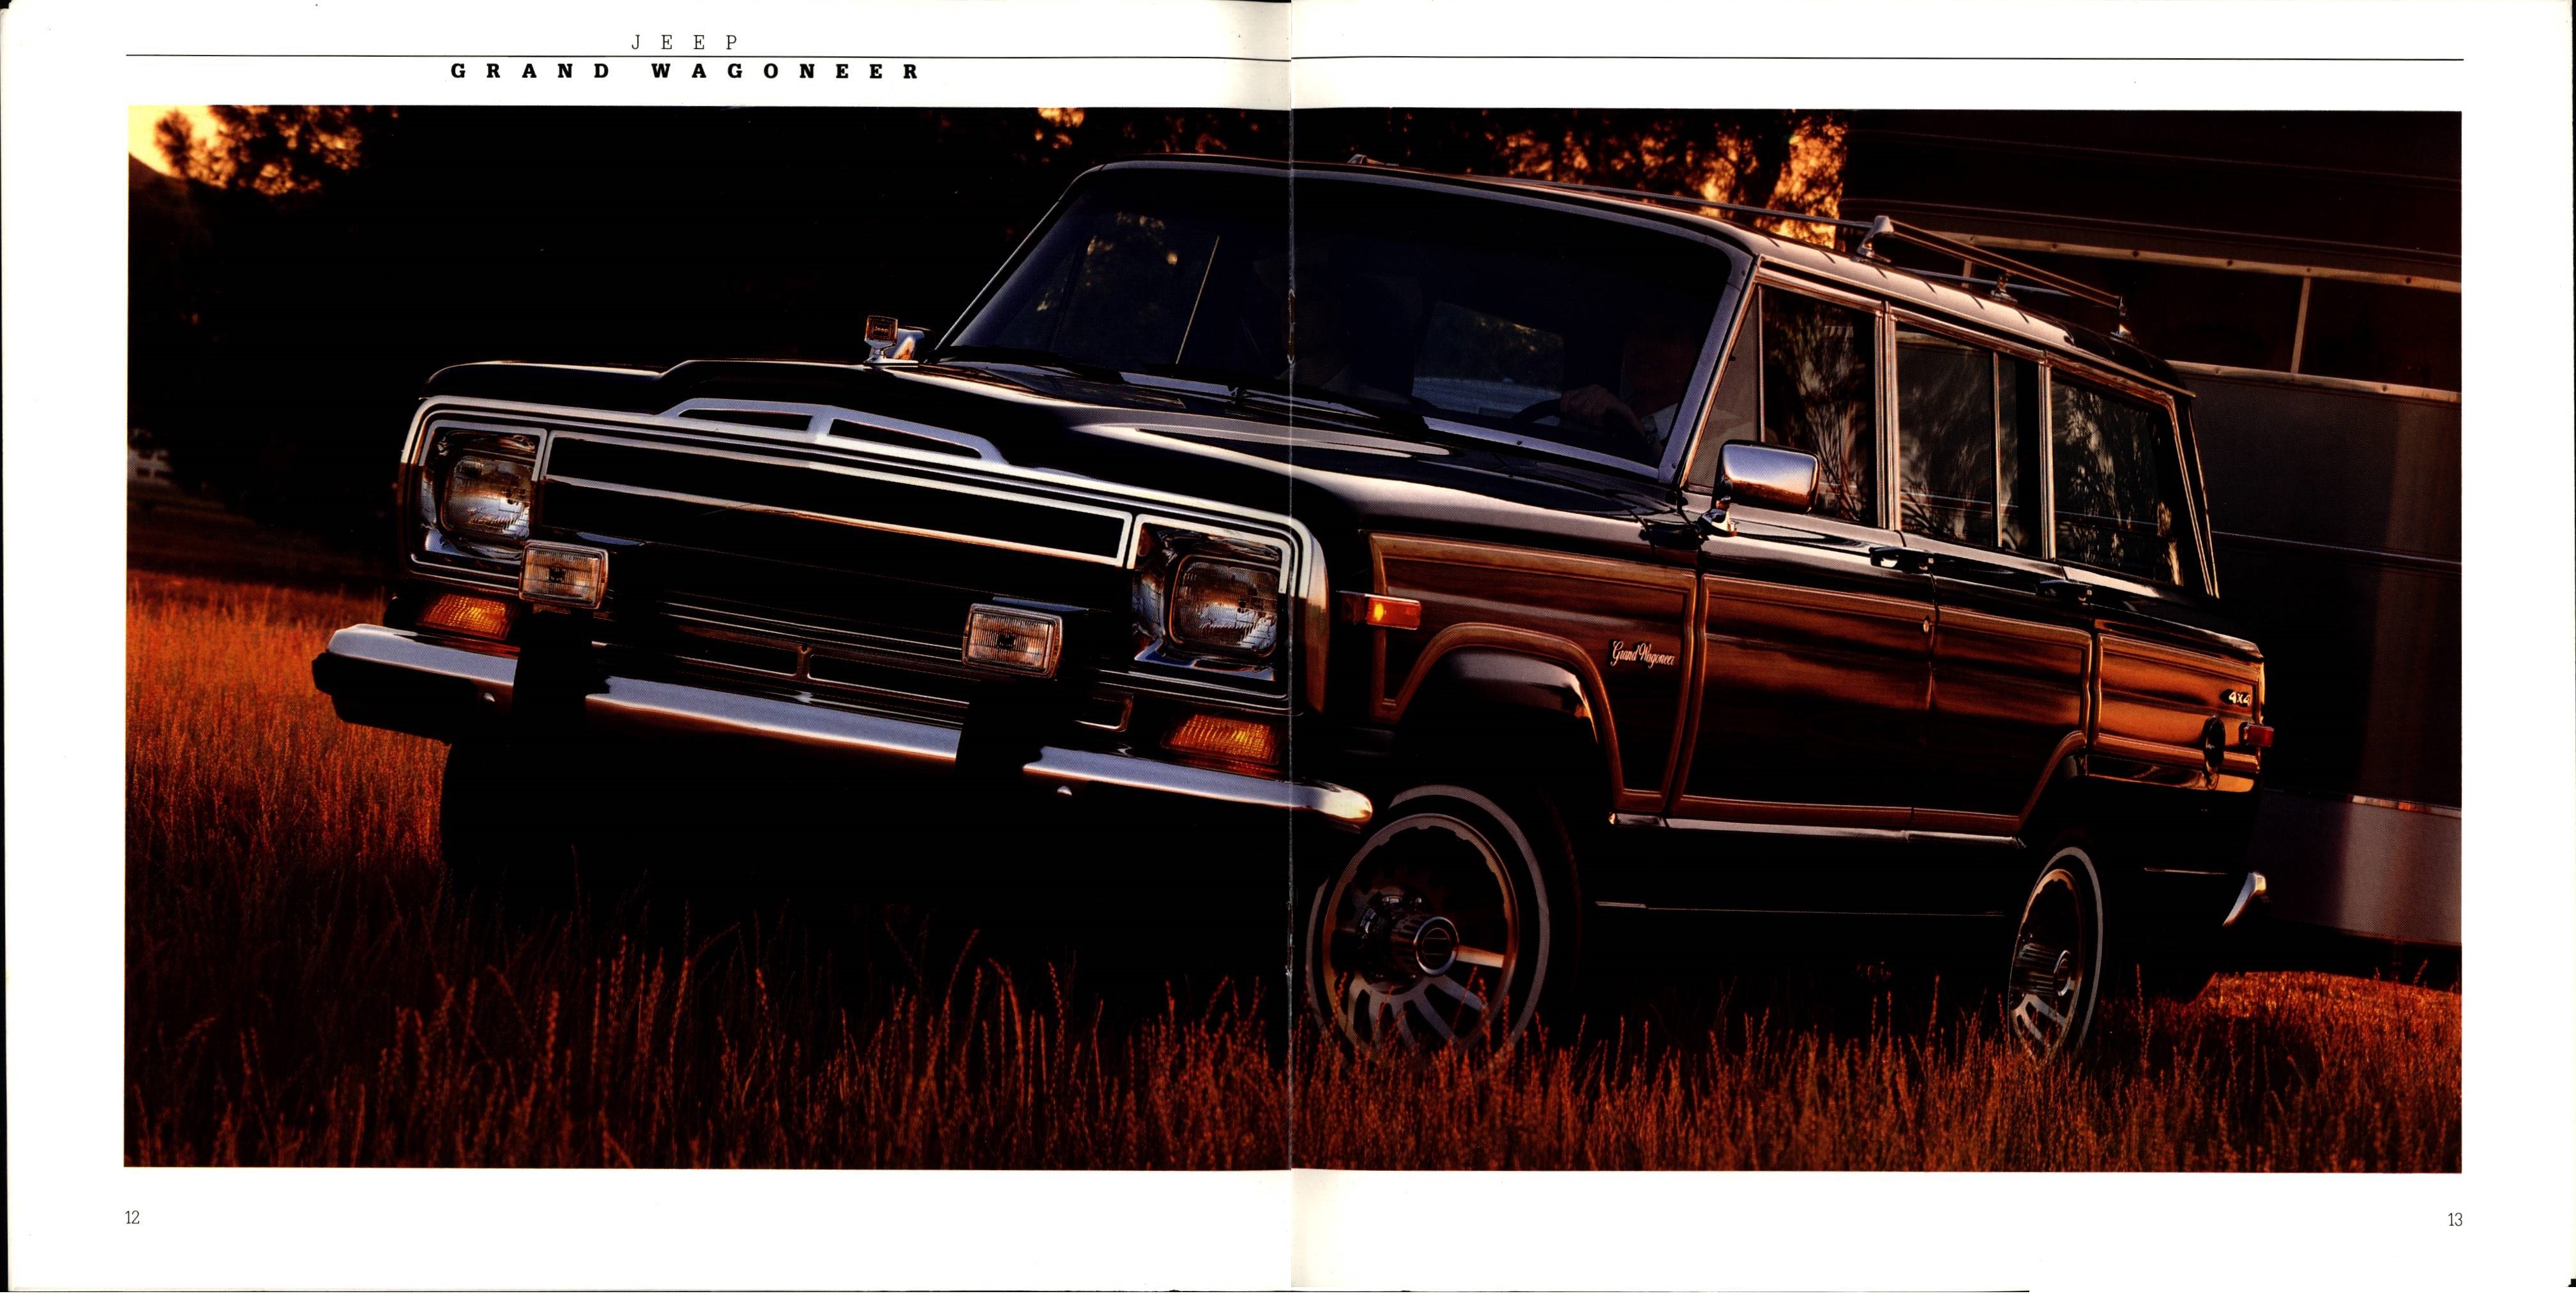 1988 Jeep Wagoneers Brochure 12-13